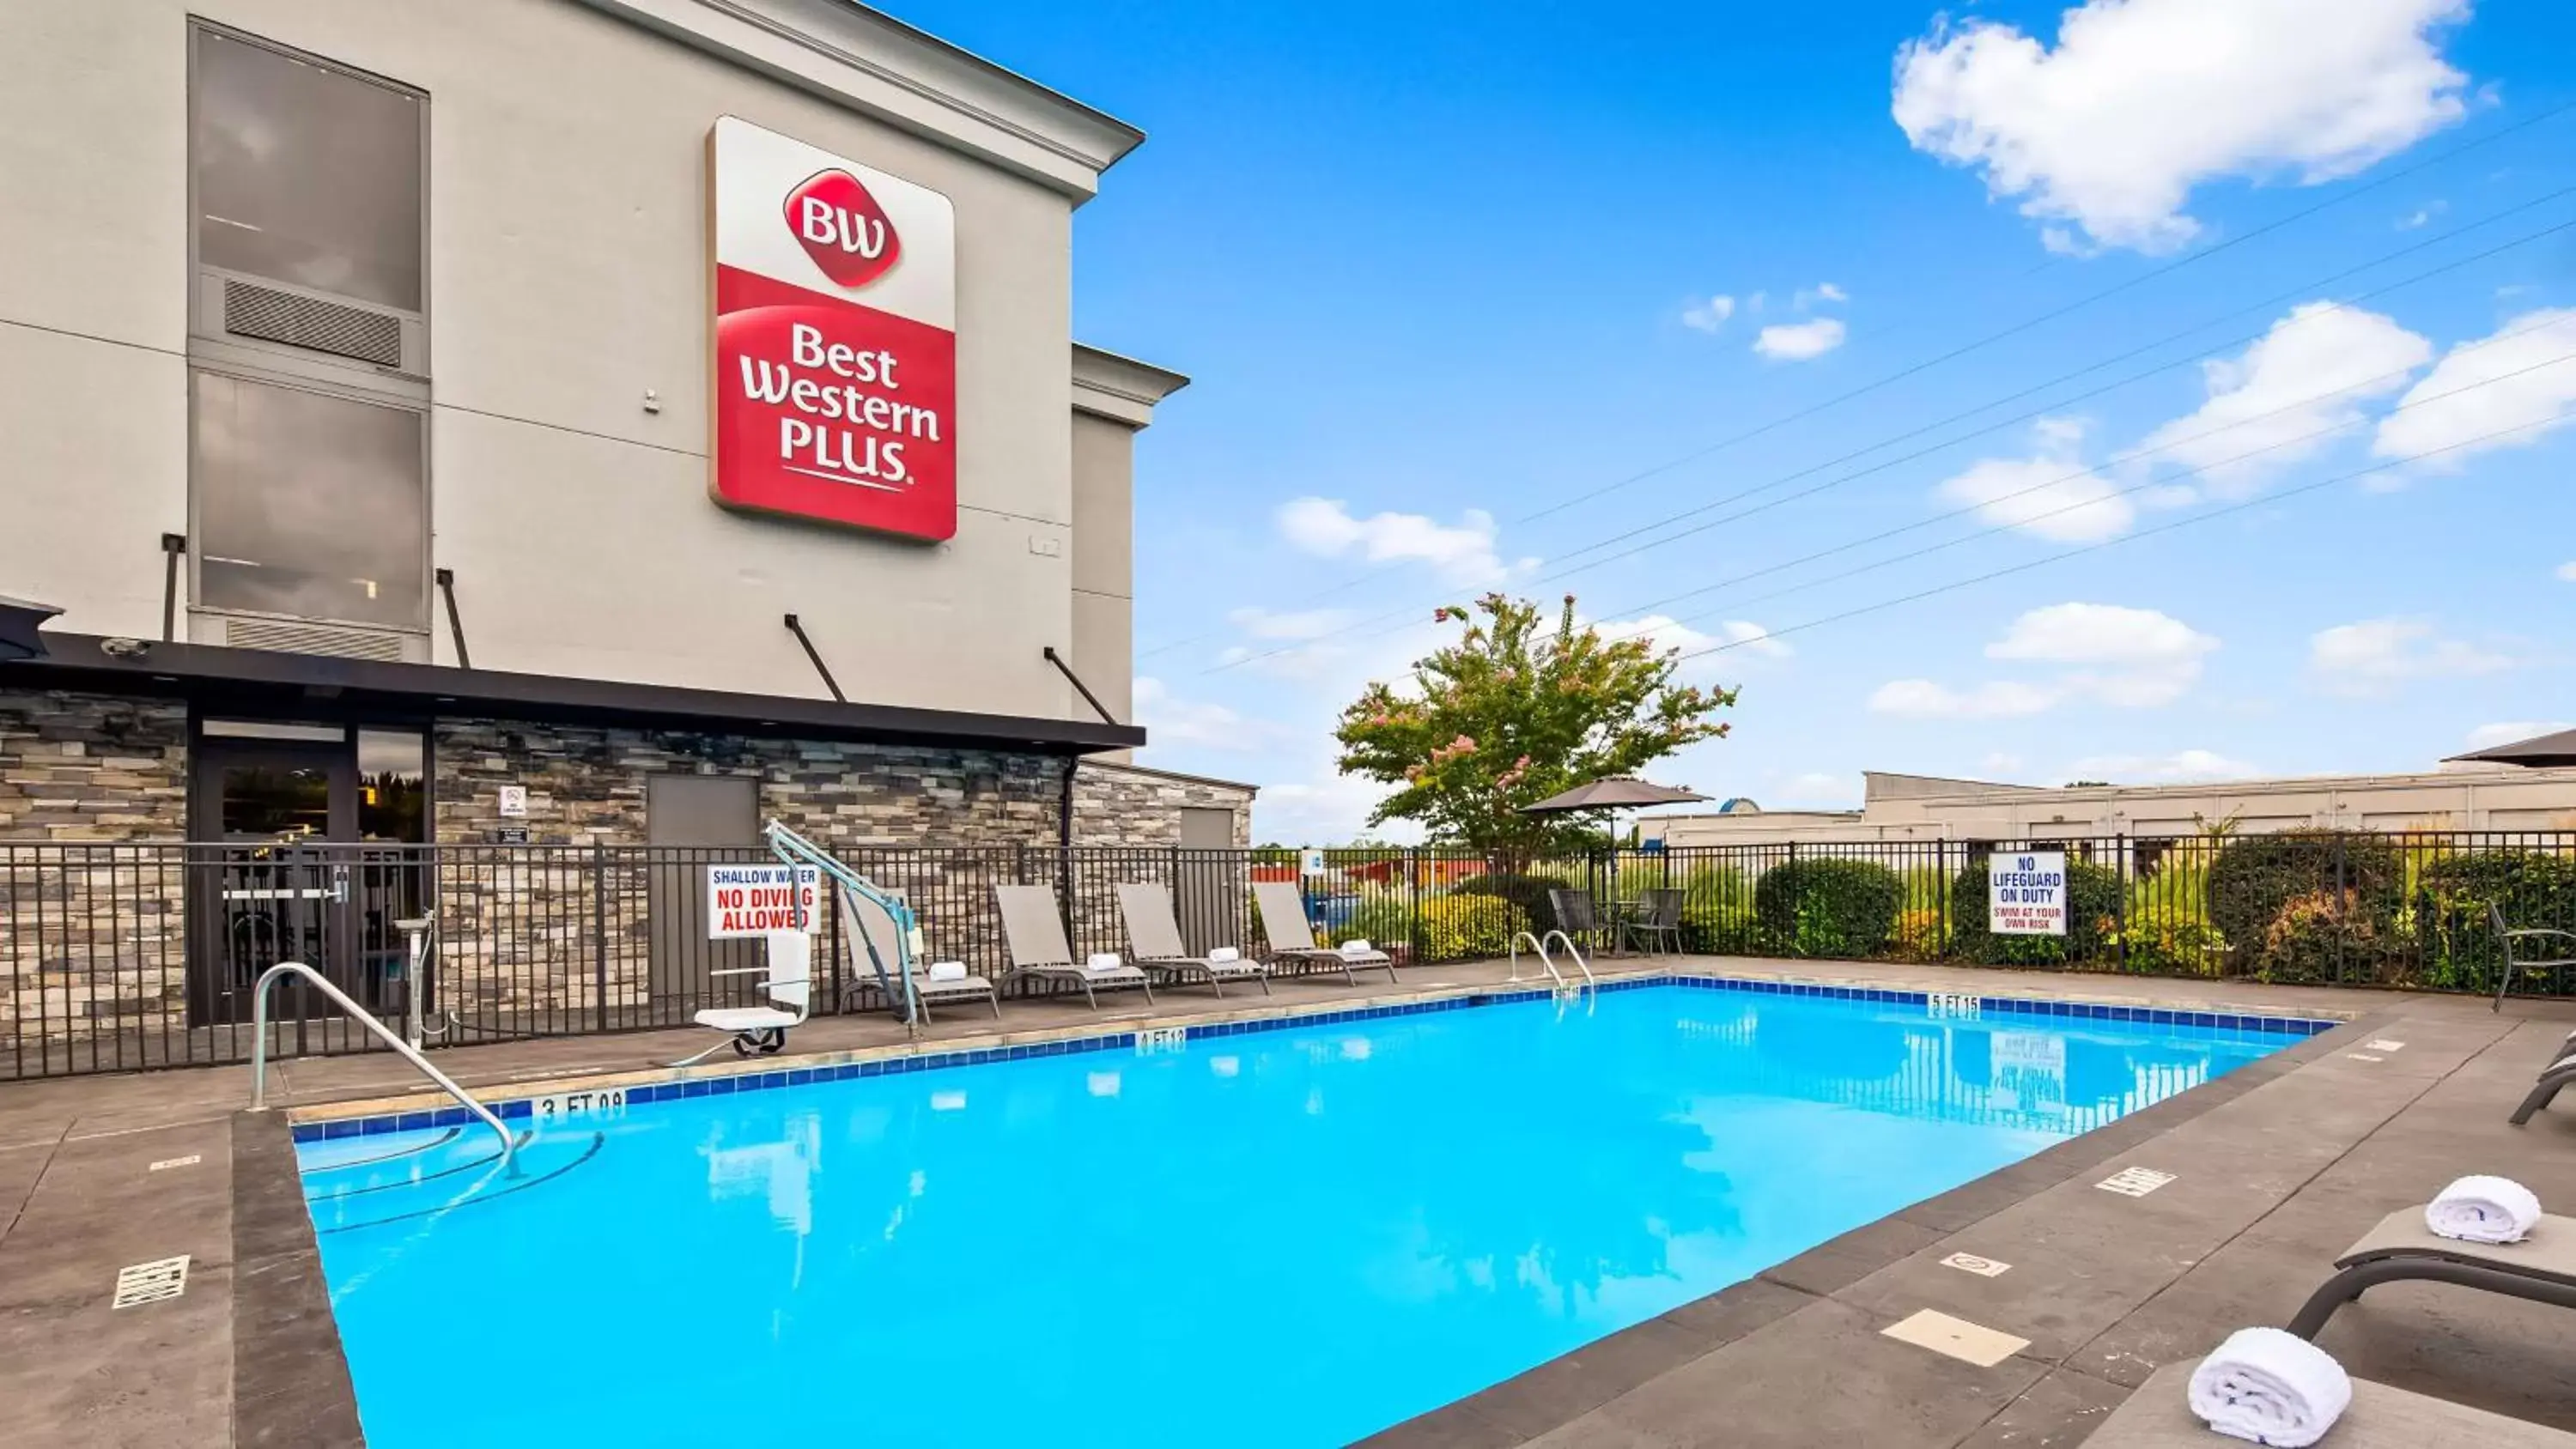 On site, Swimming Pool in Best Western Plus Greenville I-385 Inn & Suites